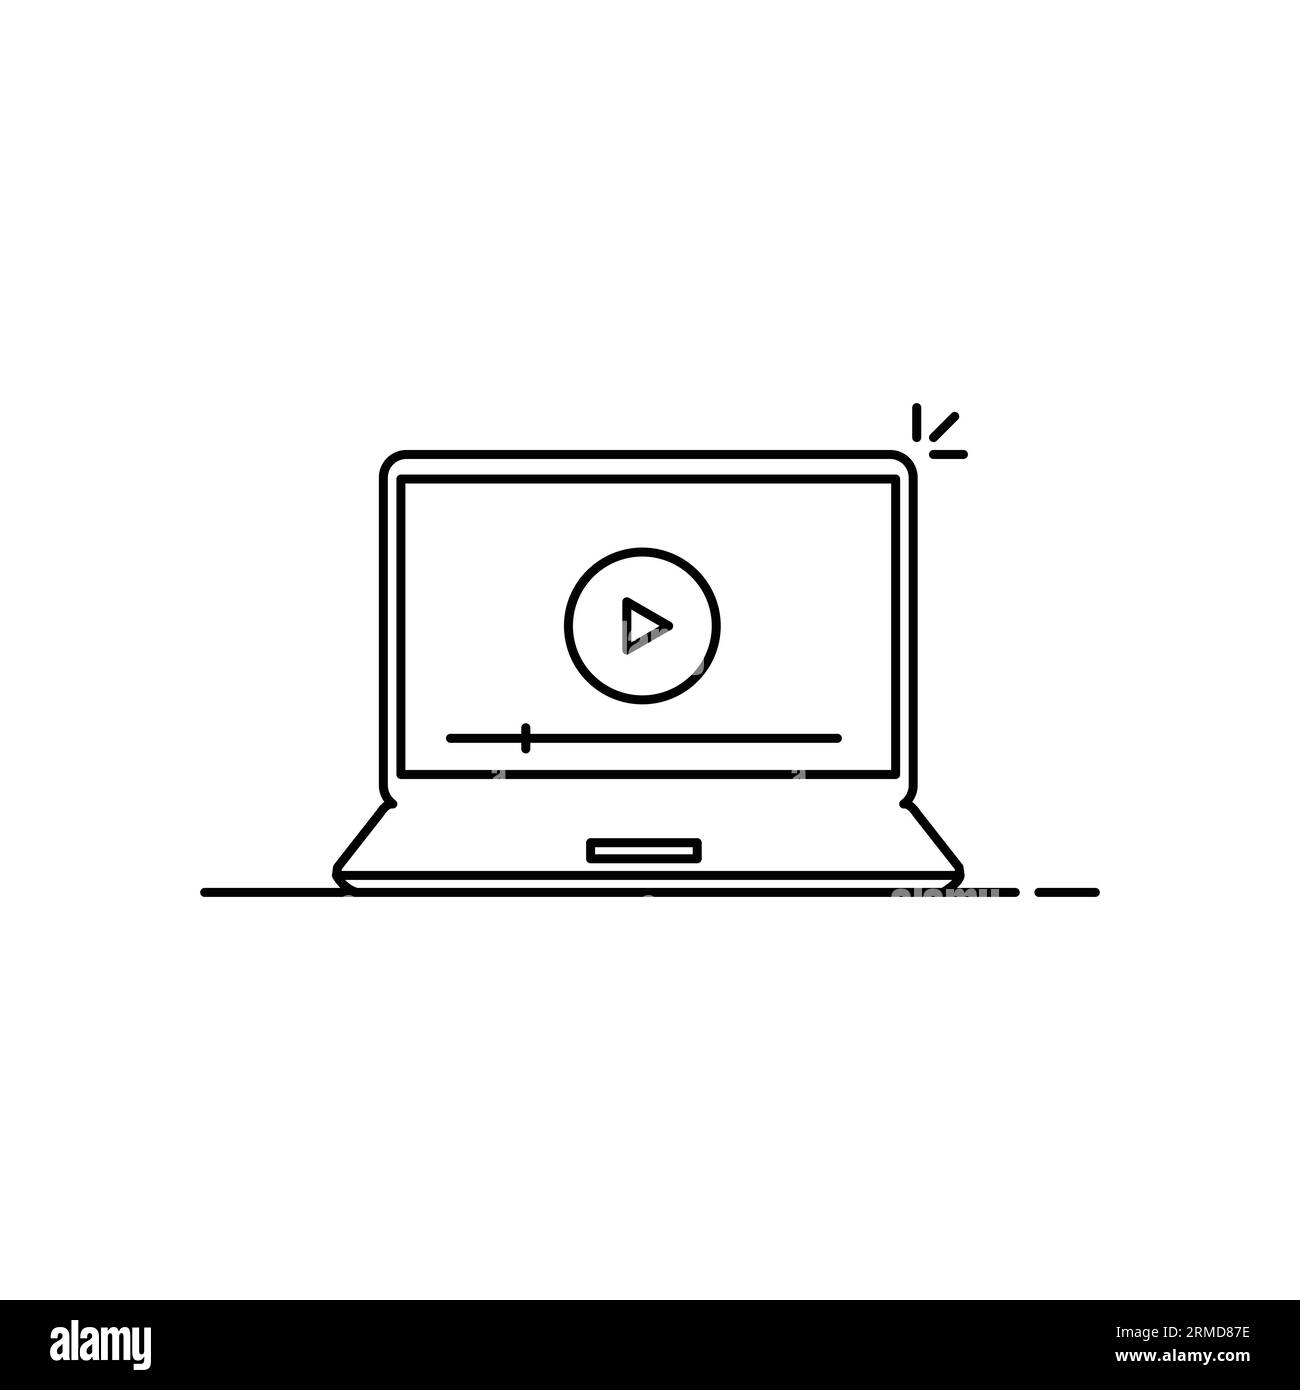 portátil negro de línea delgada como ver webinar. tendencia de estilo de contorno plano diseño gráfico de logotipo de e-learning moderno aislado sobre fondo blanco. concepto Ilustración del Vector